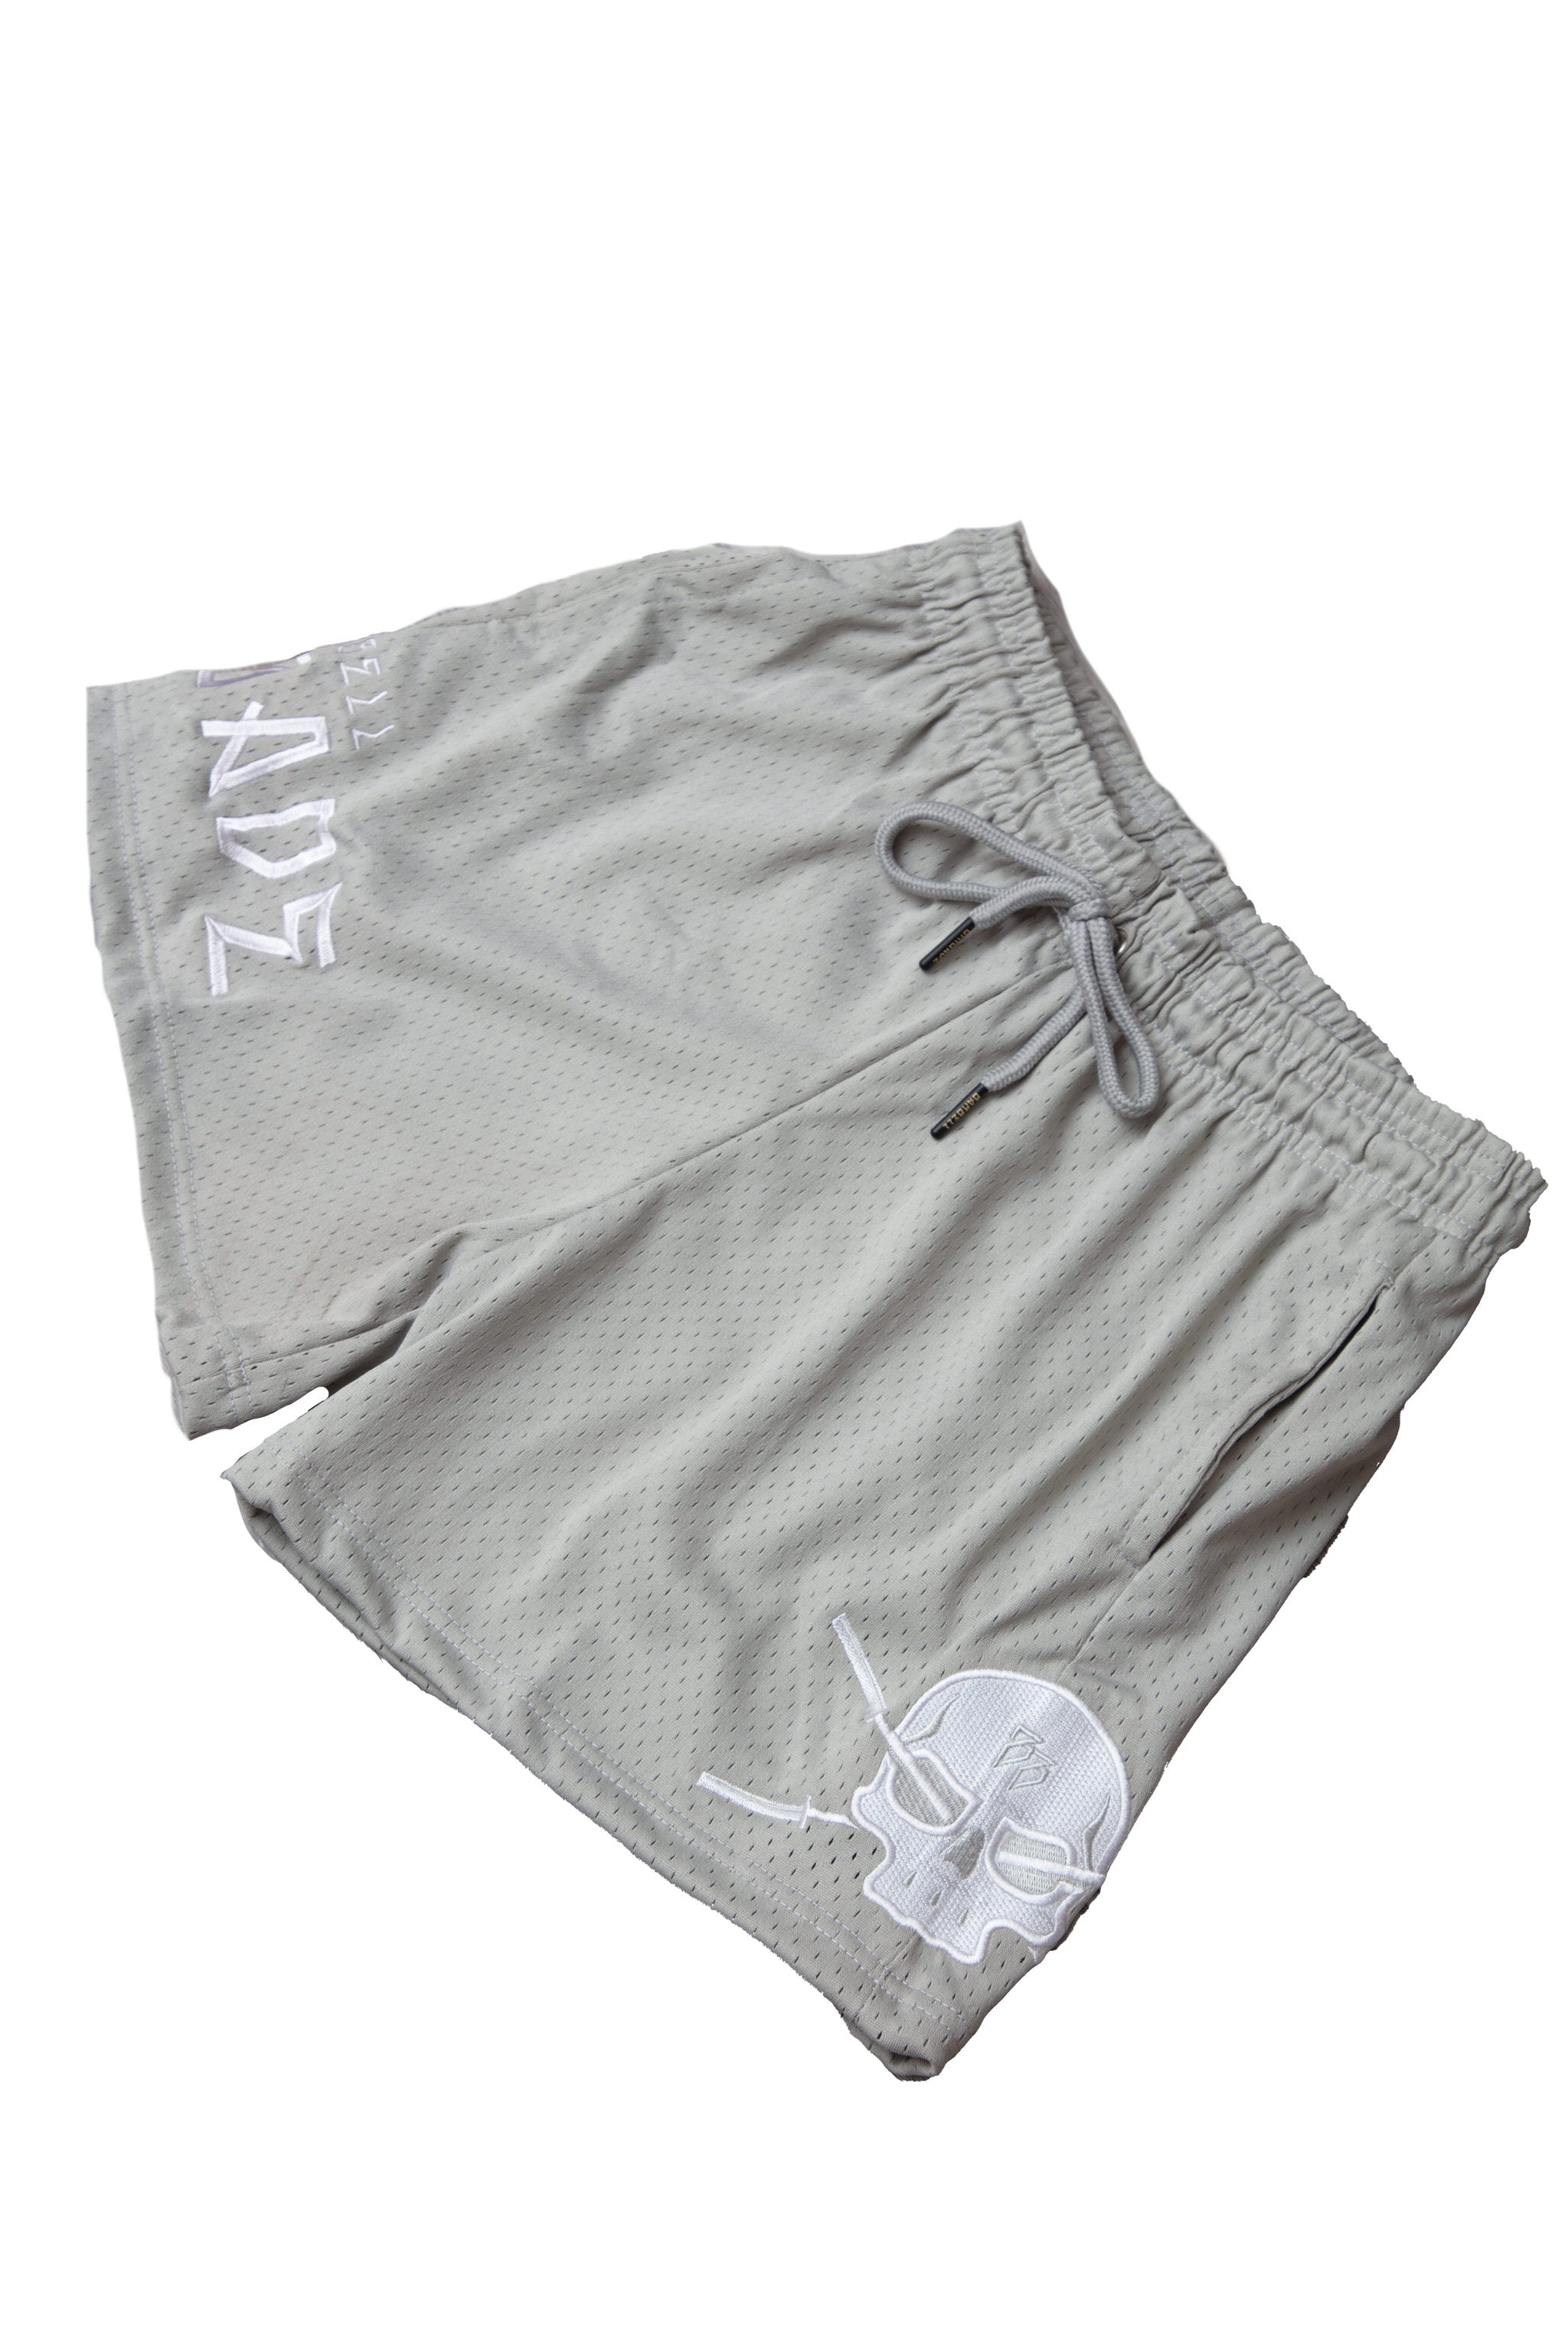 New Limits - Mesh Shorts (White) – Barbell Brigade